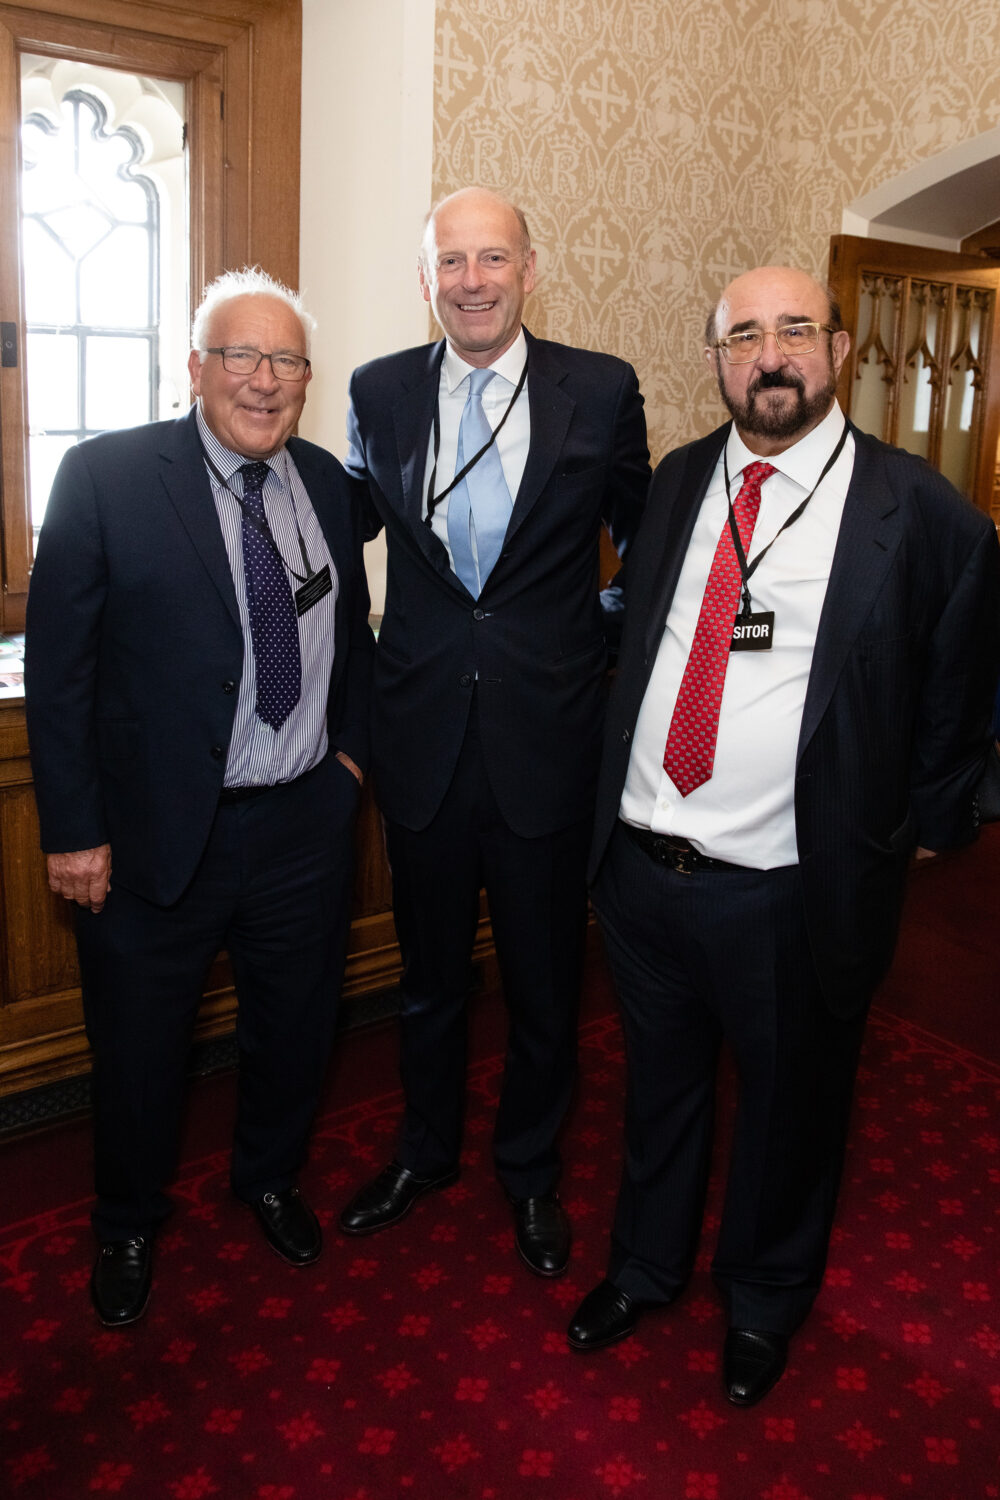 Sir John Timpson CBE, Rupert Goodman DL, Dr Jan Telensky